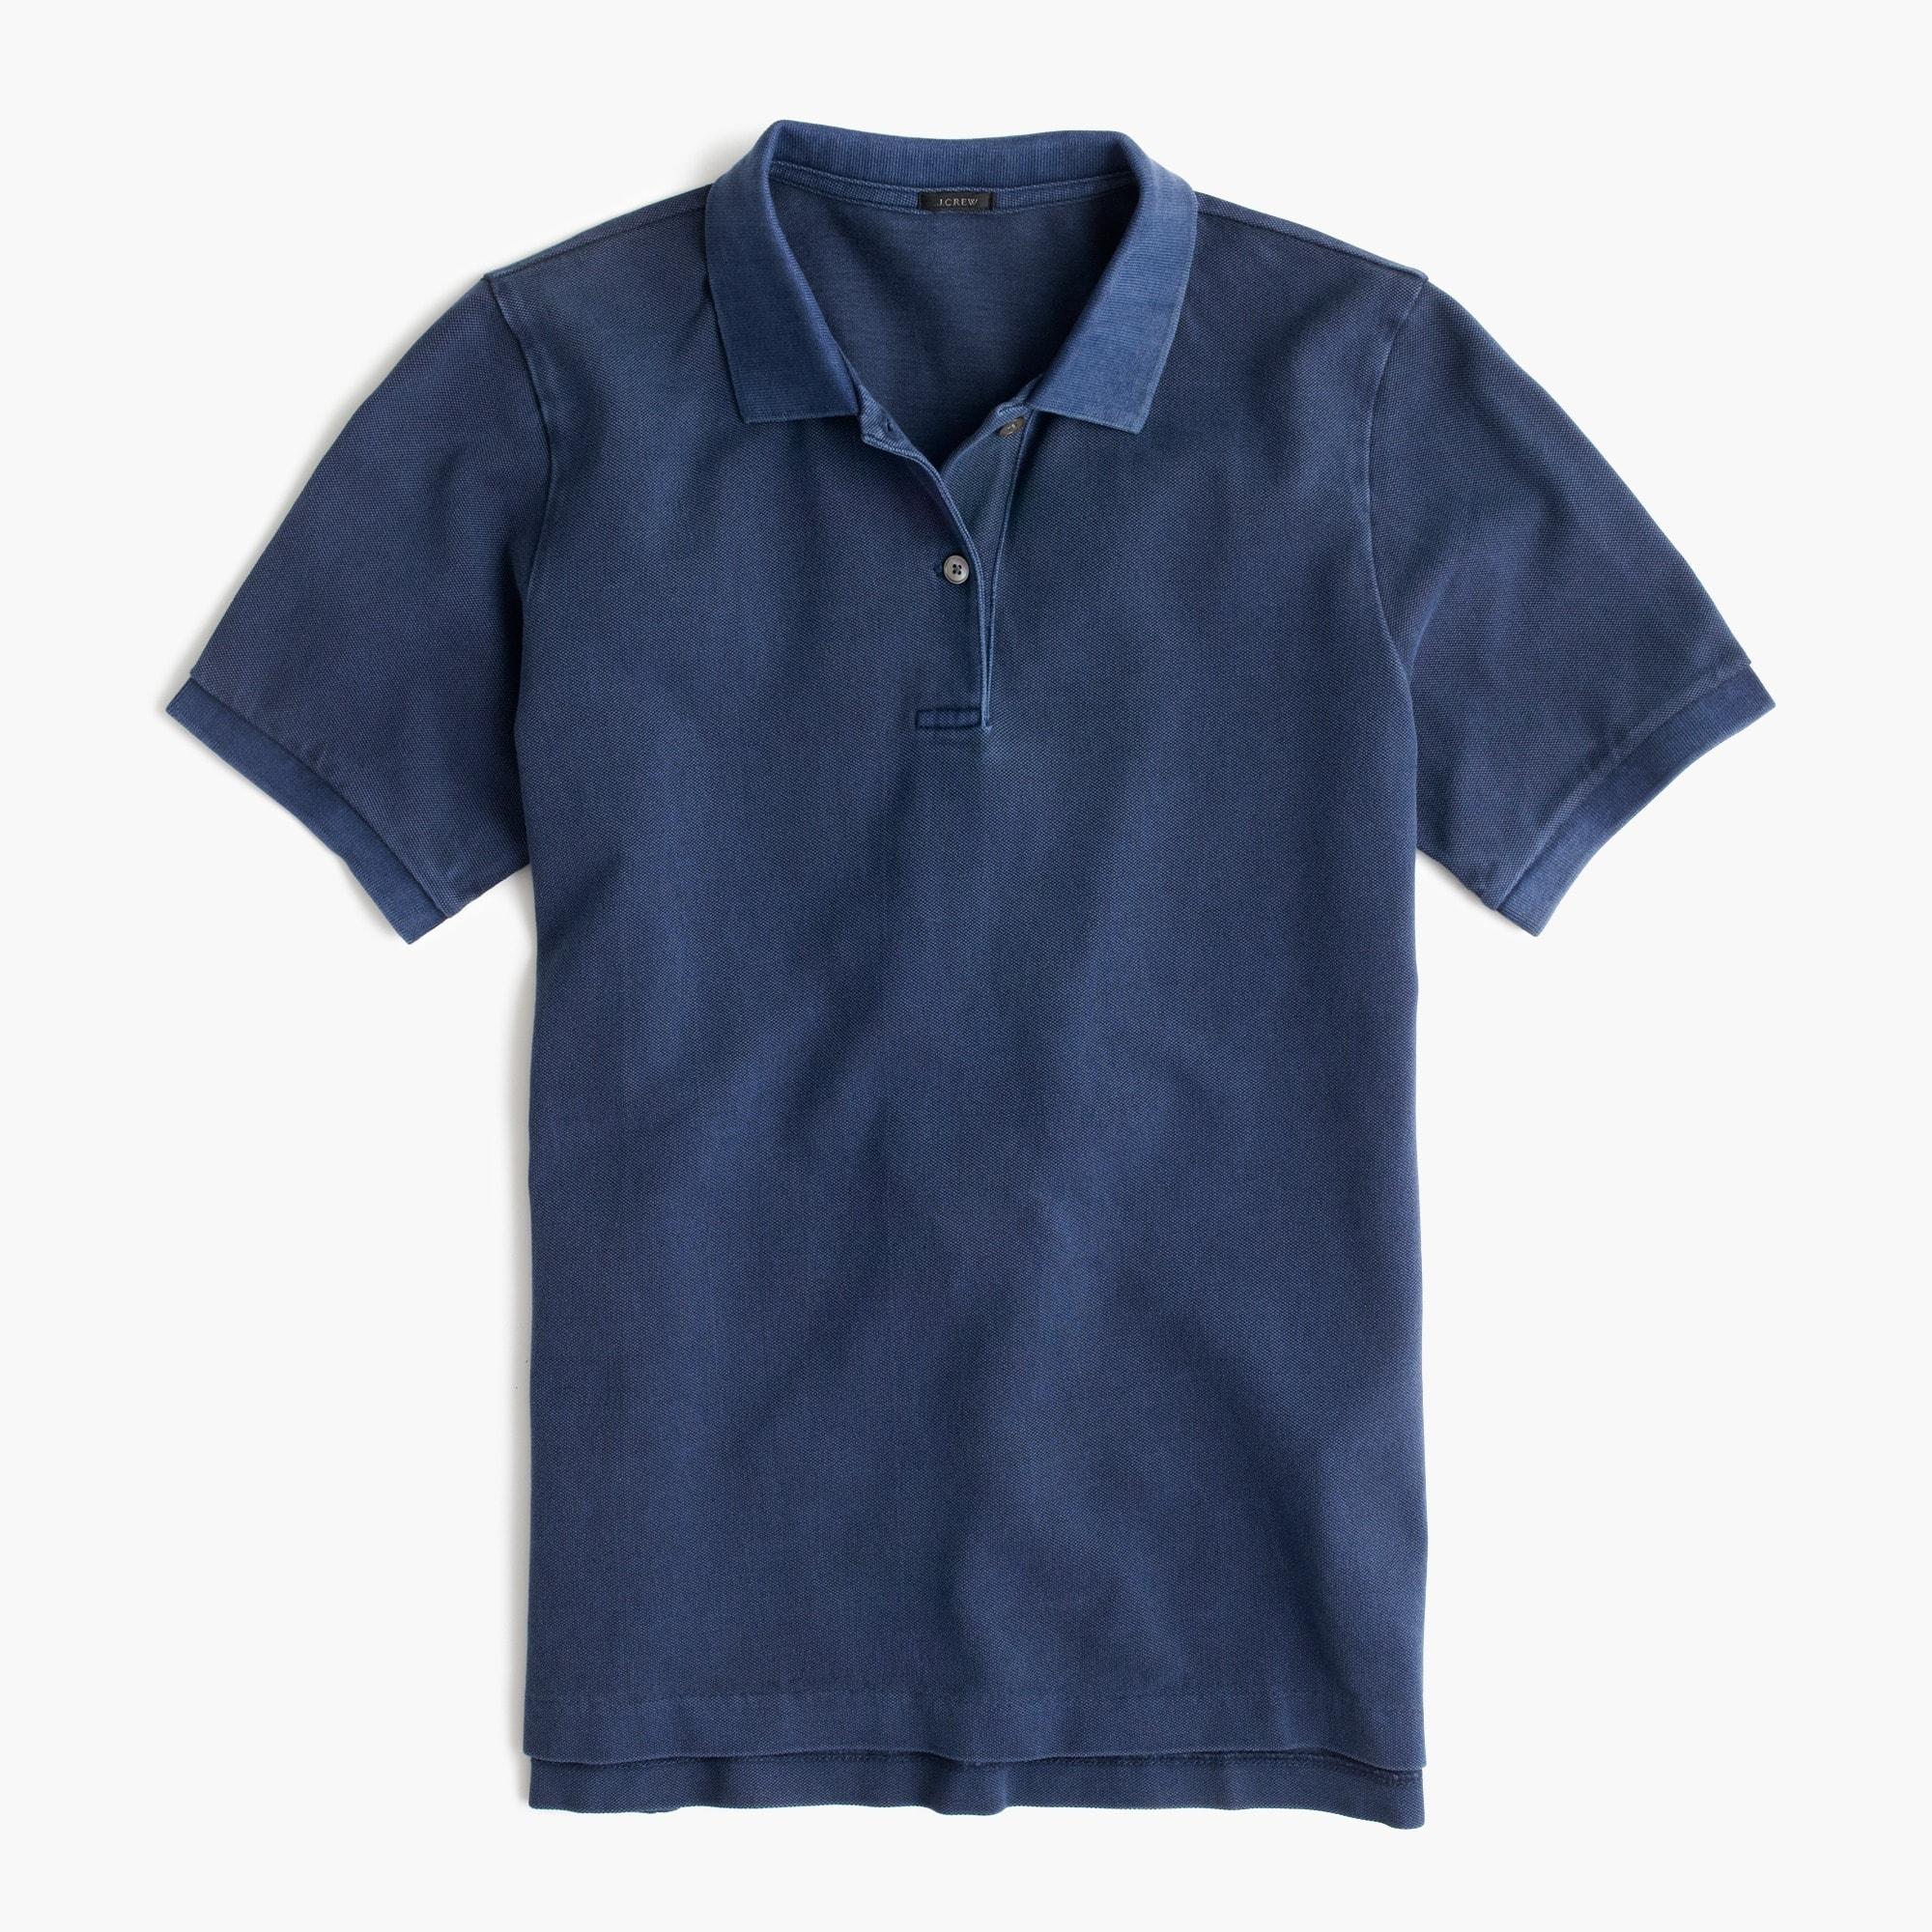 J.Crew Cotton Garment-dyed Piqué Polo Shirt in Navy (Blue) - Lyst